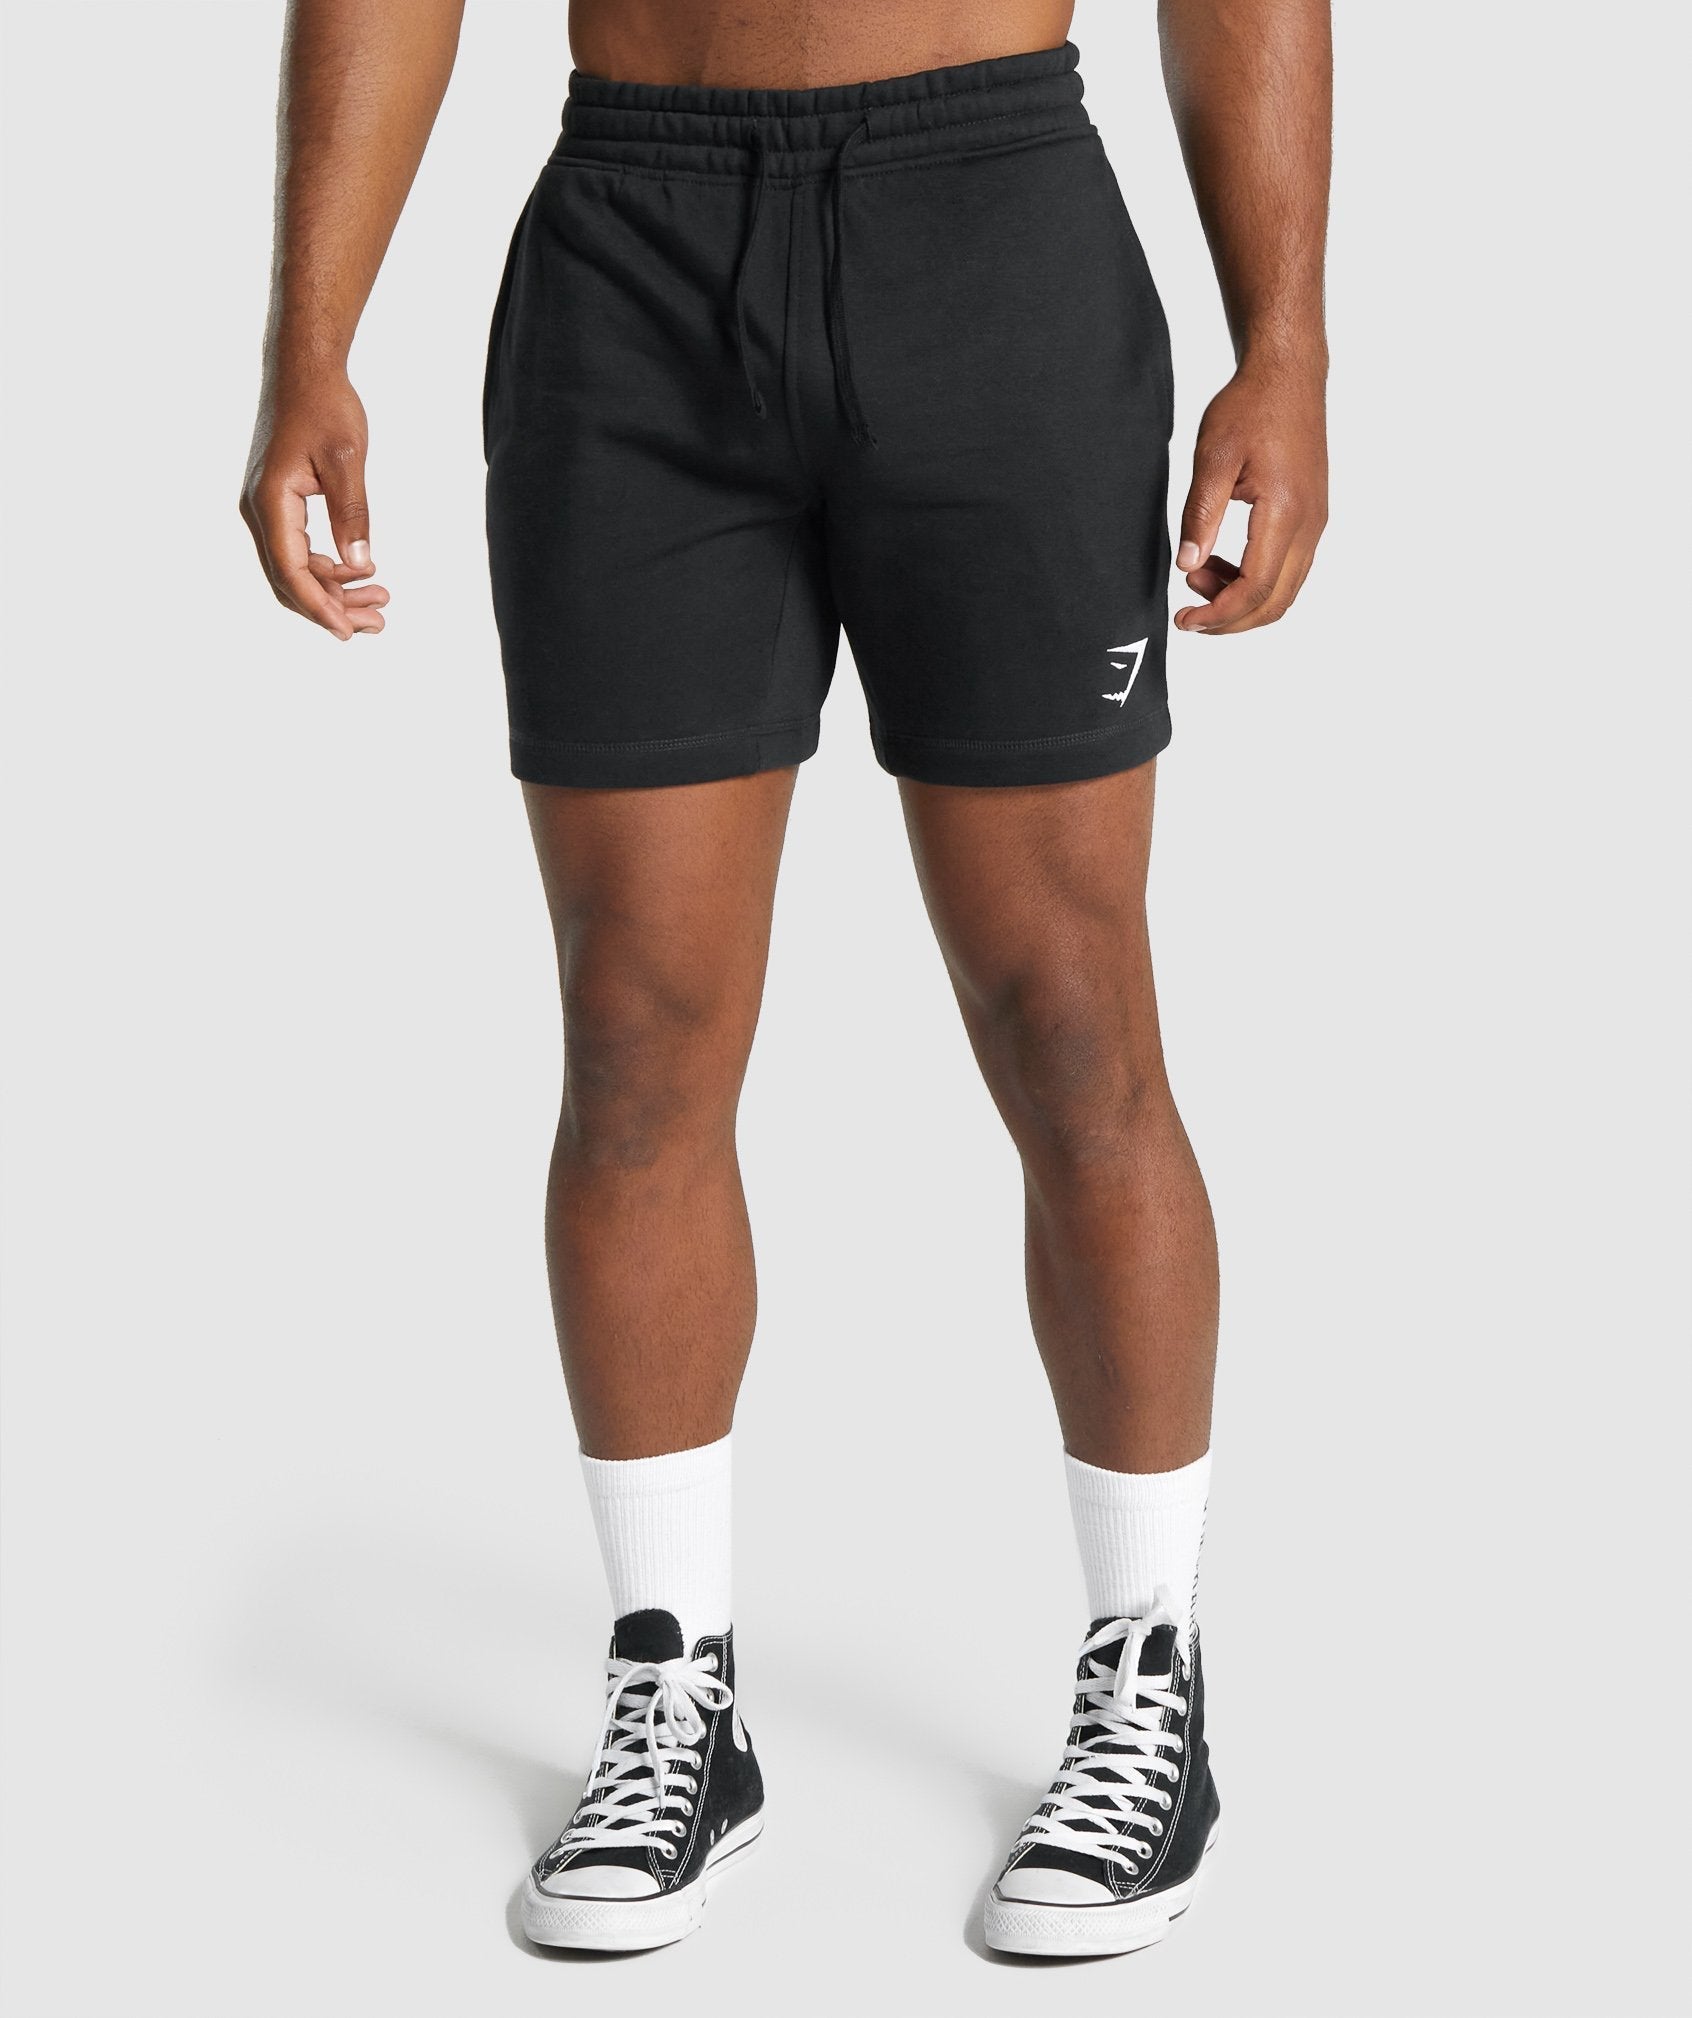 Men's Pocket Shorts & Gym Shorts with Pockets – Gymshark